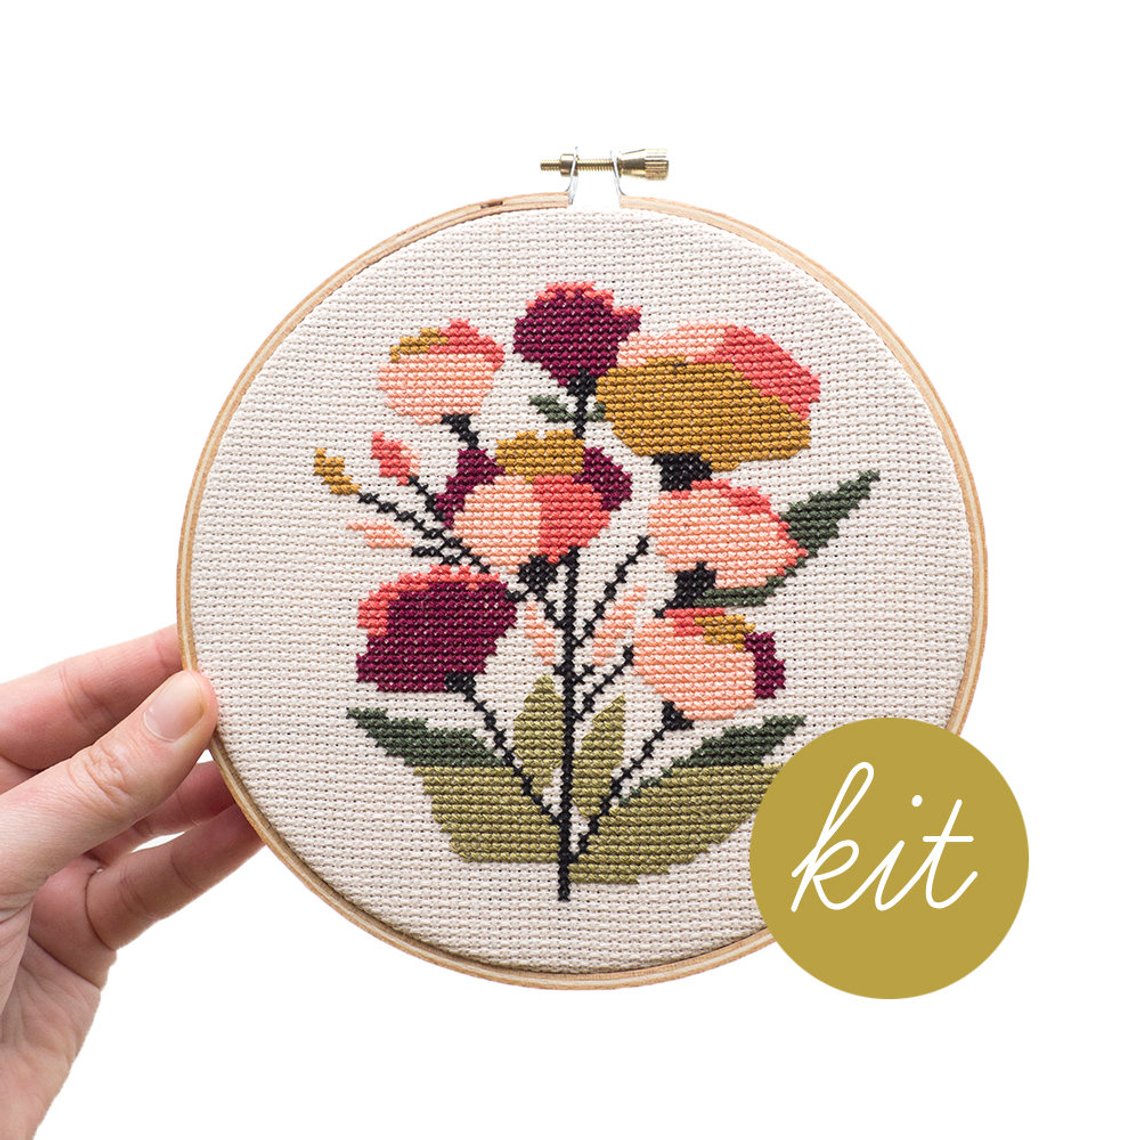 modern floral cross stitch kit